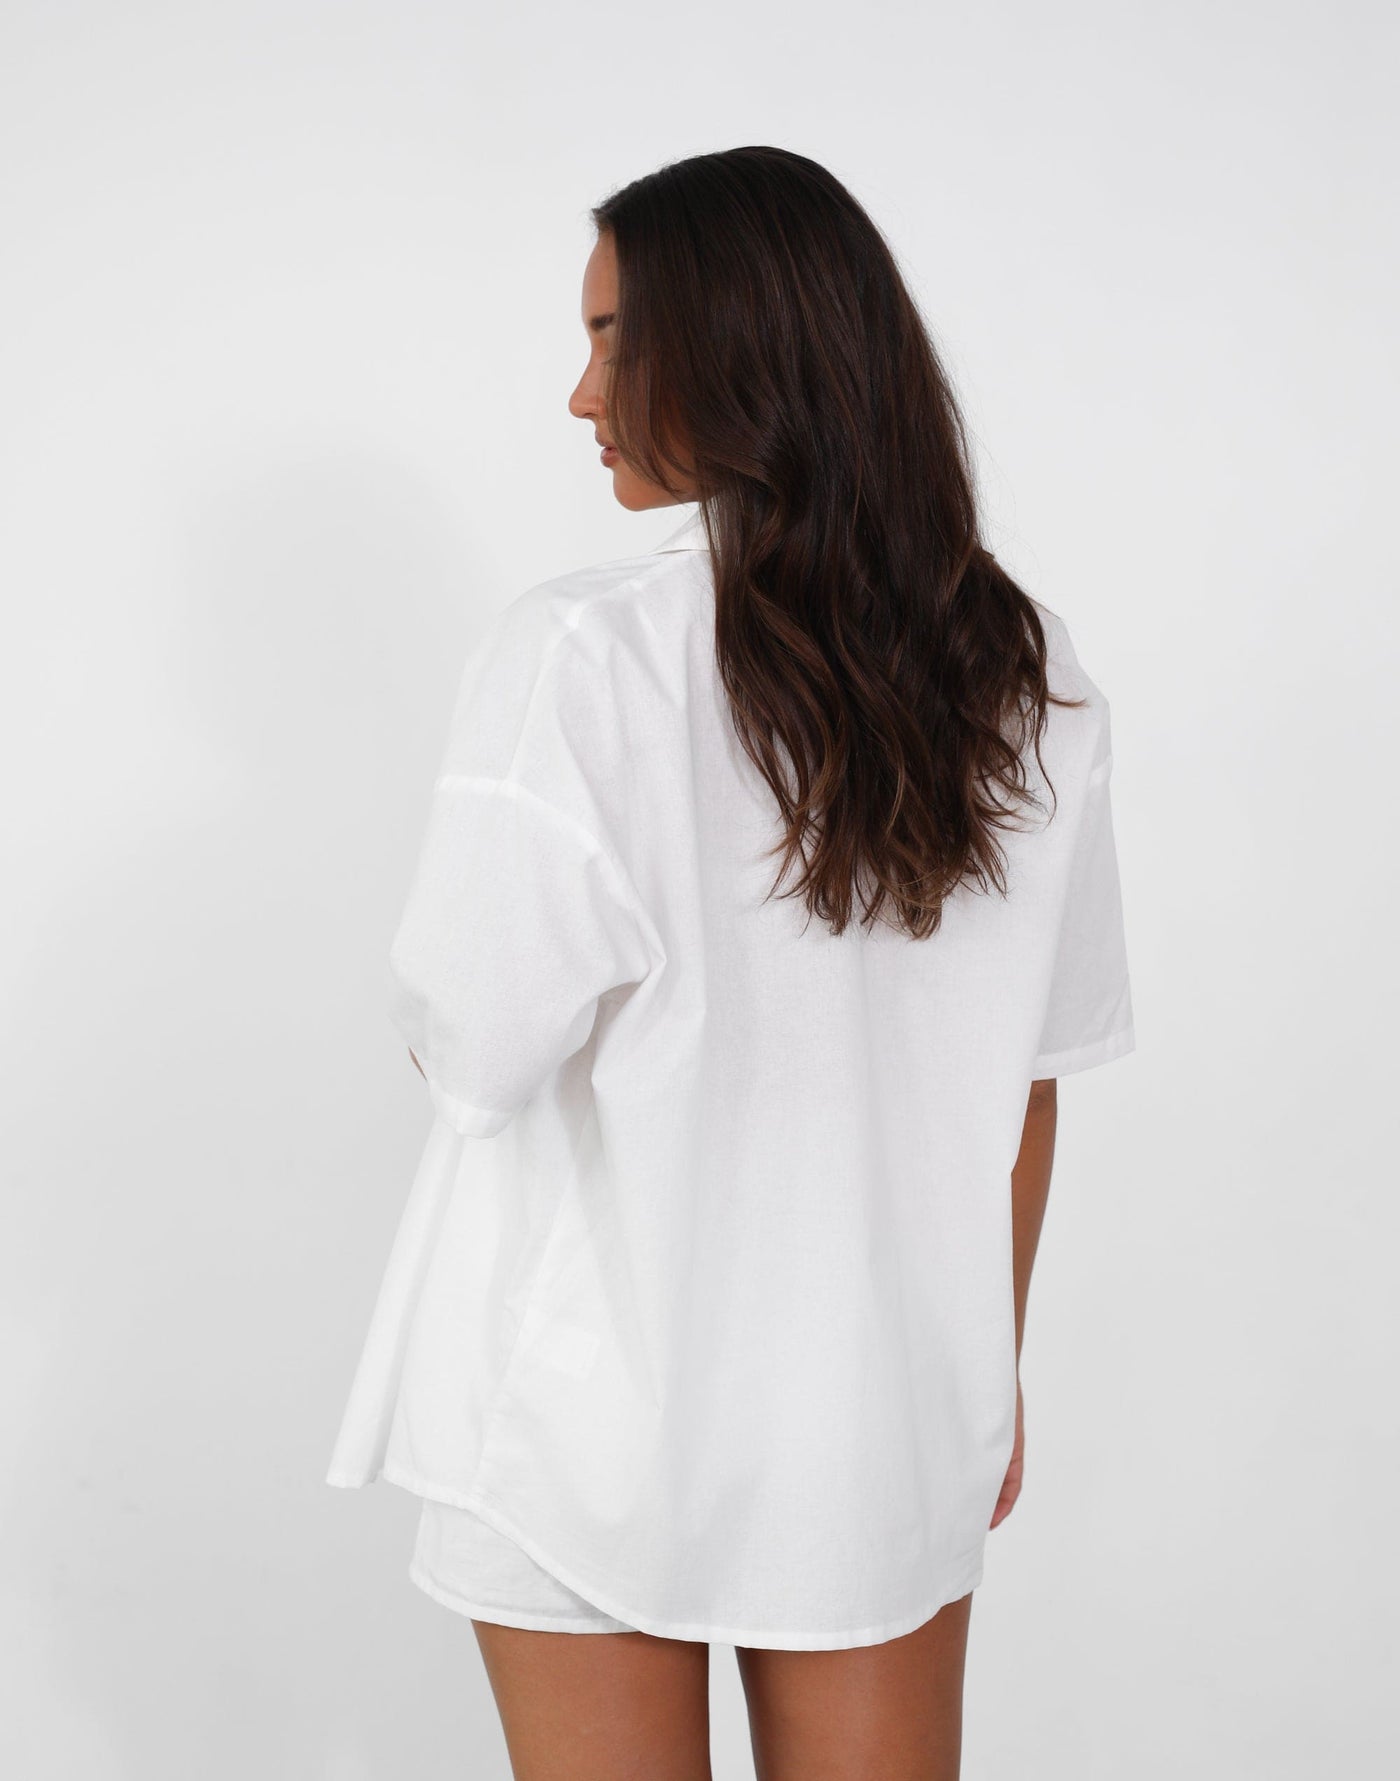 Klara Shirt (White) | Charcoal Exclusive - White Button Up Shirt - Women's Top - Charcoal Clothing